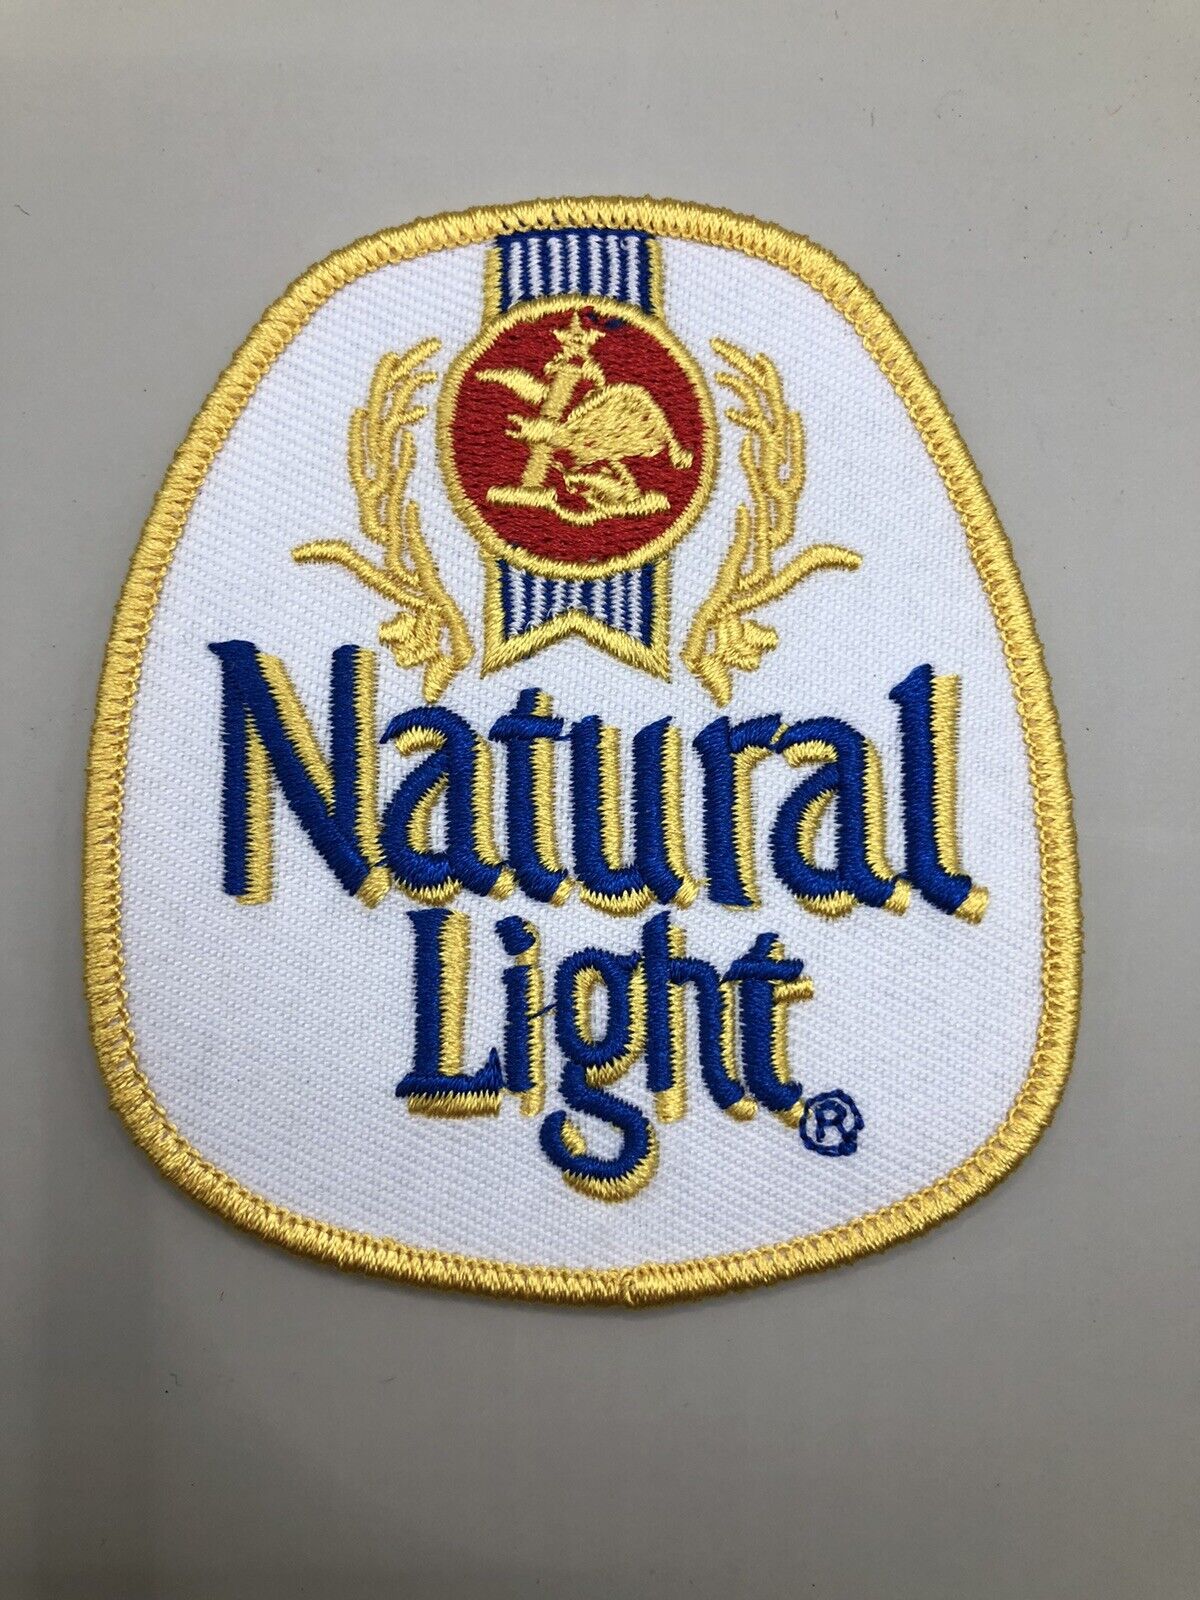 Natural Light Anheuser Busch Beer Iron On Patch 3.25”x2.75”